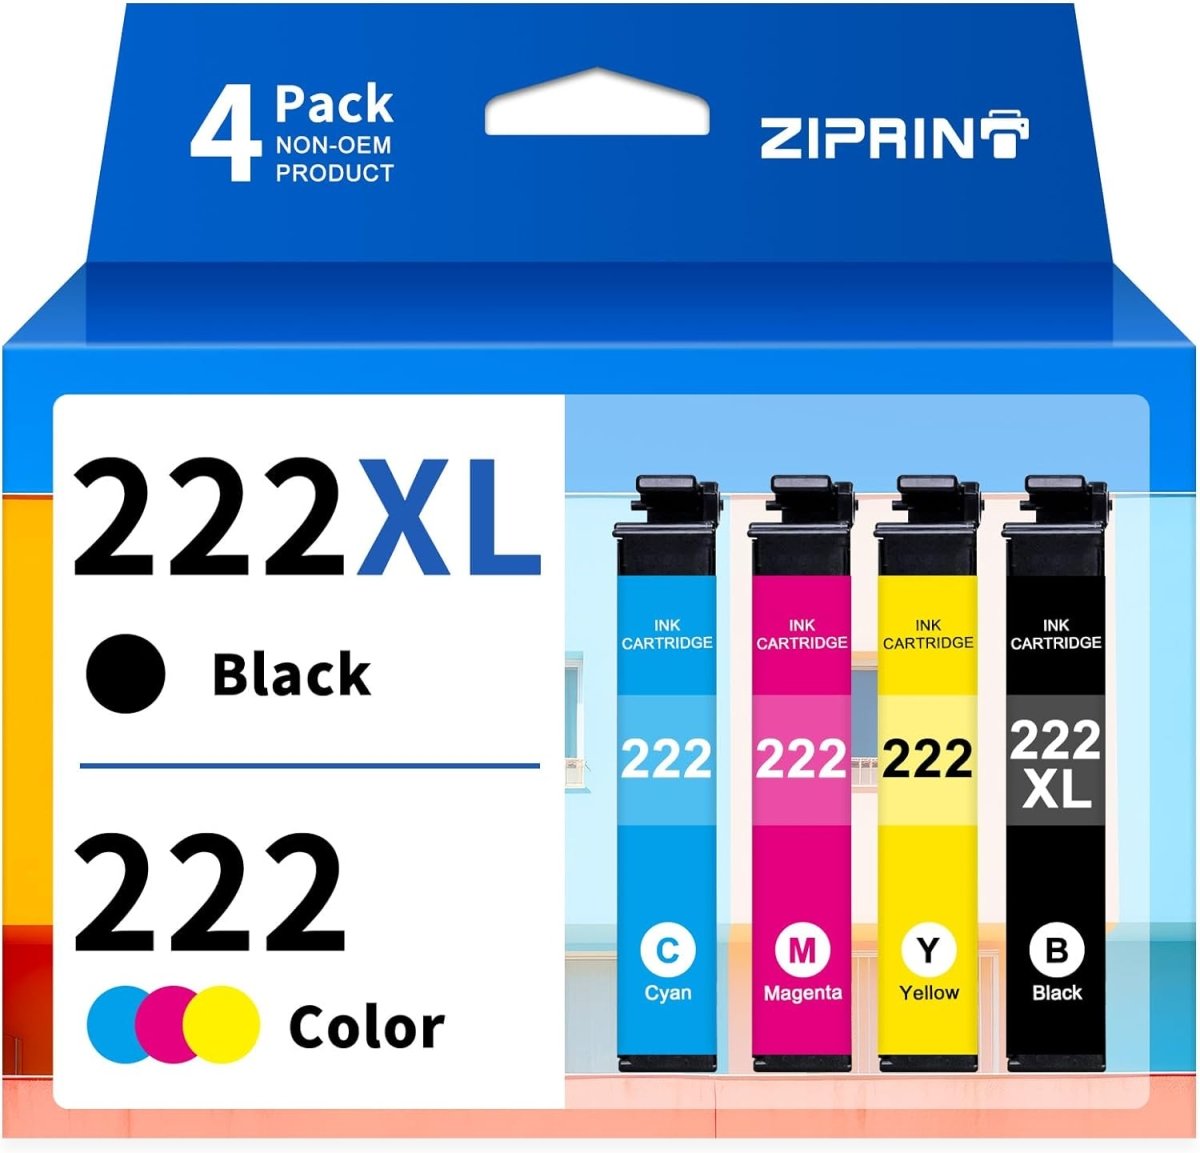 Remanufactured Epson 222xl Ink Cartridges (Black, Cyan, Magenta, Yellow, 4-Pack ) - Linford Office:Printer Ink & Toner Cartridge